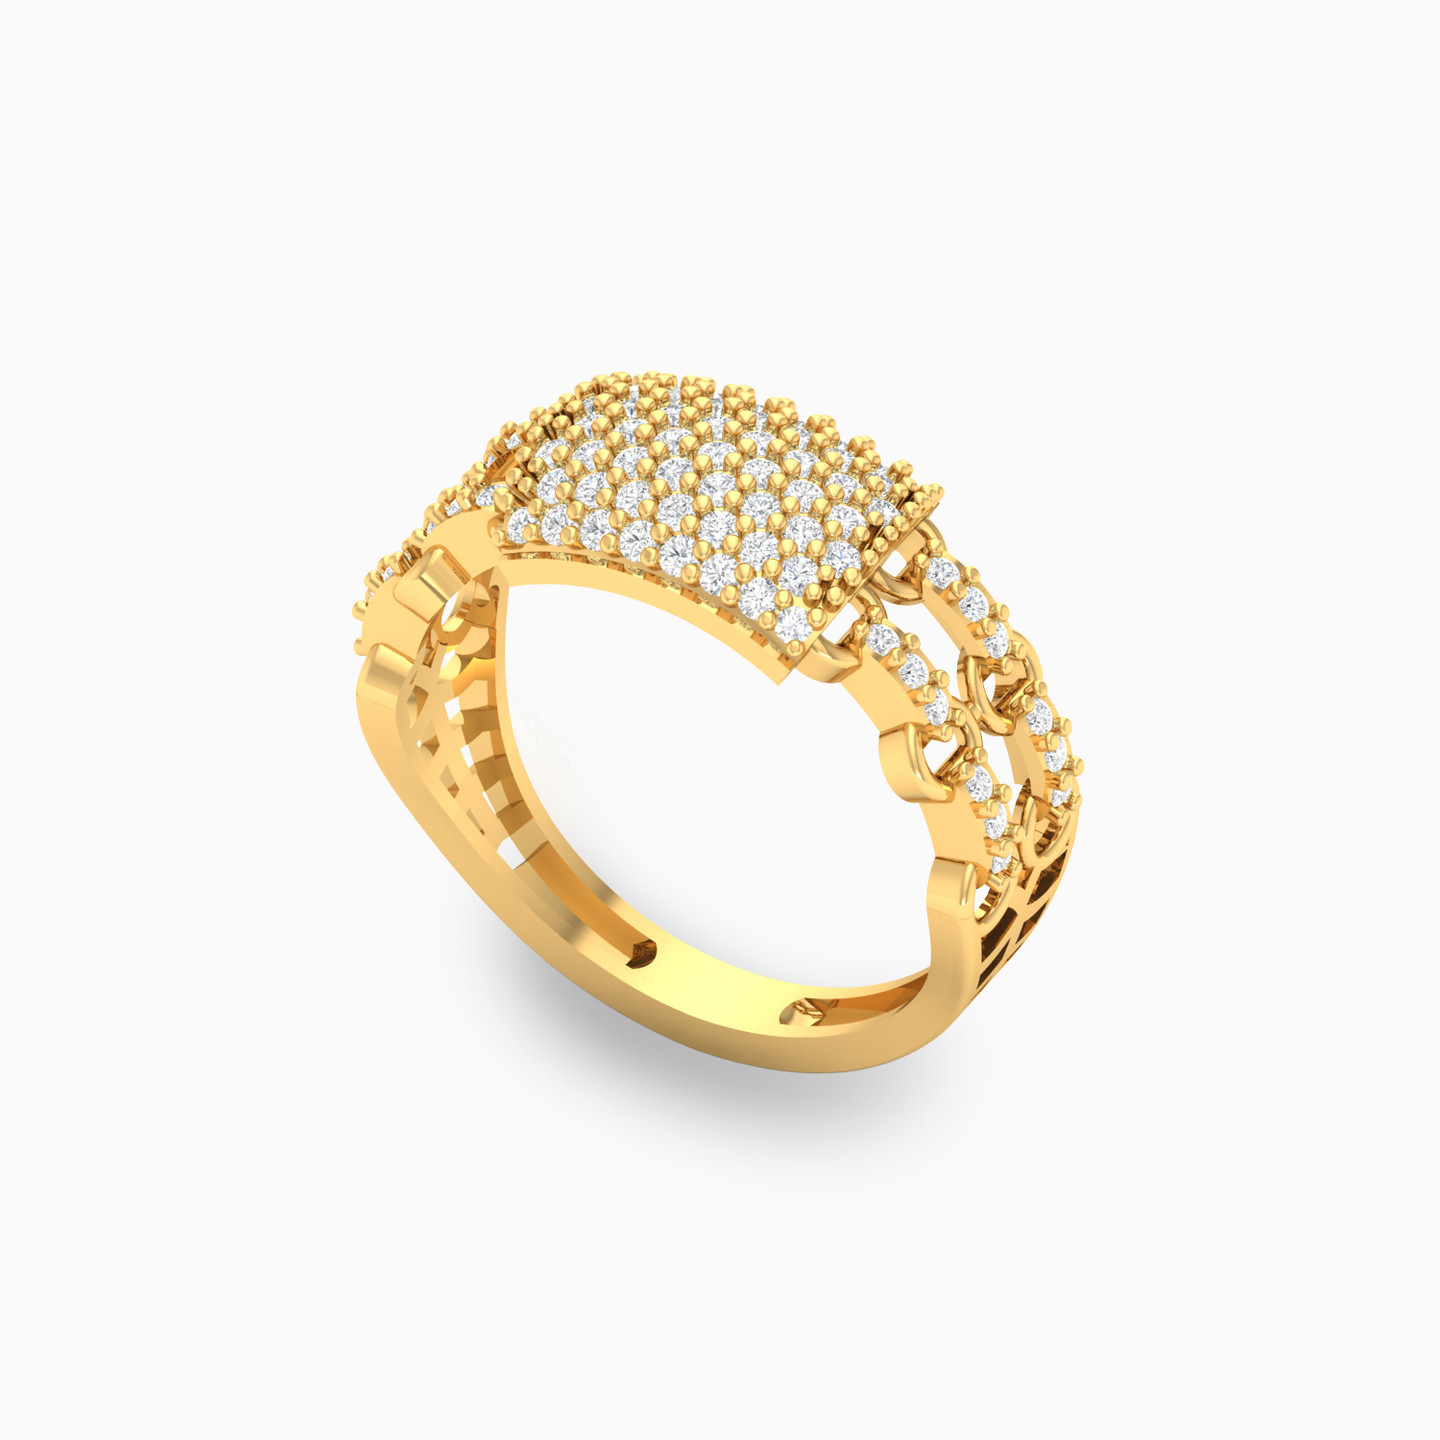 18K Gold Cubic Zirconia Statement Ring - 2